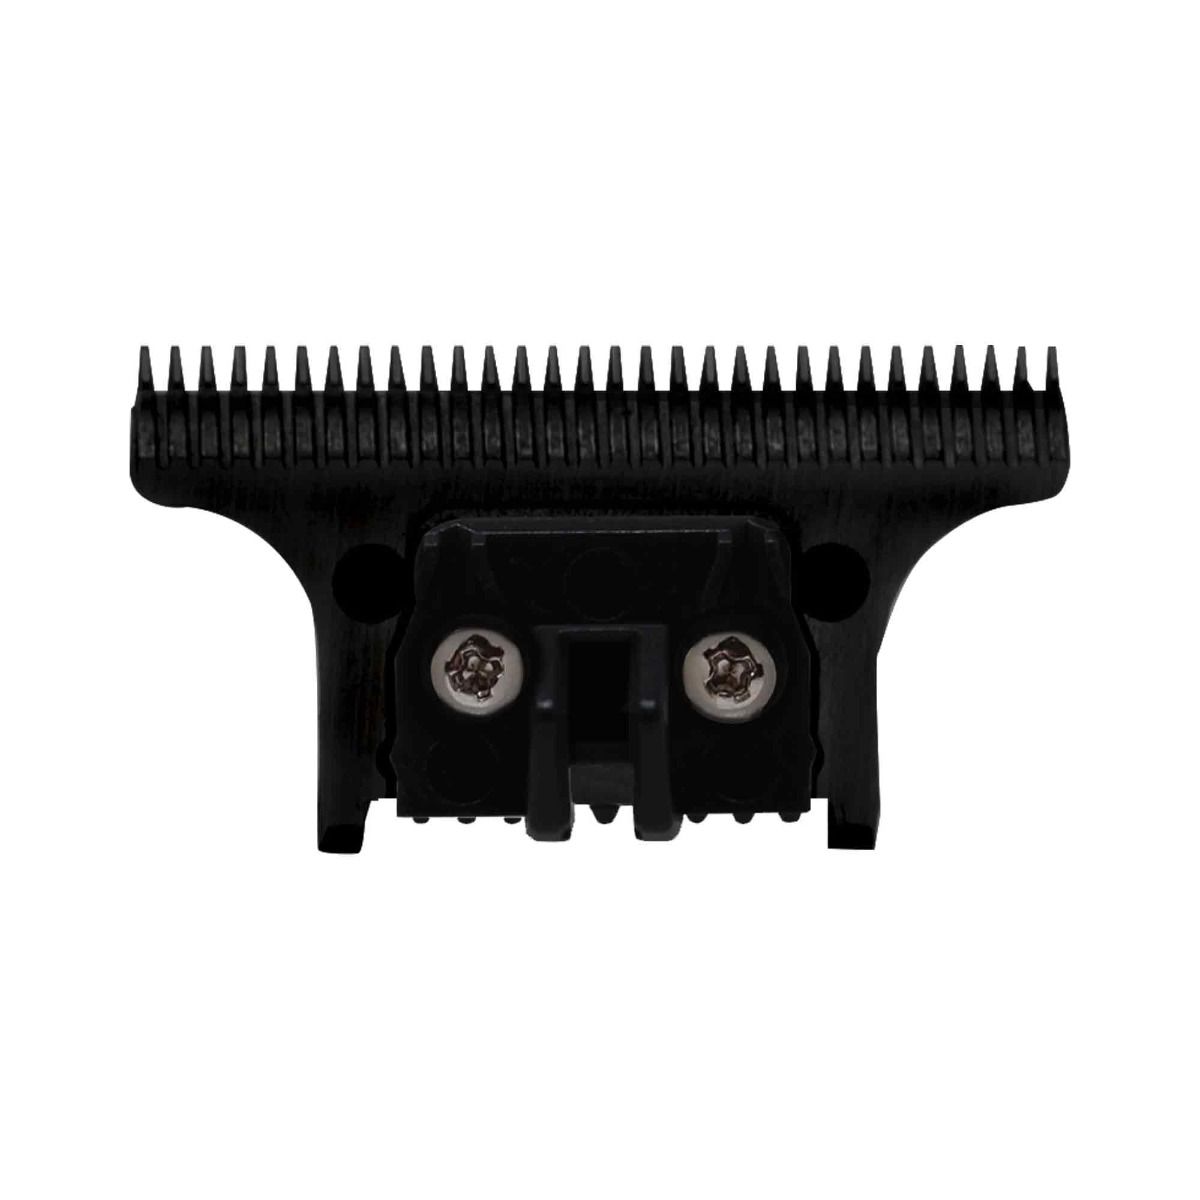 Style Craft Saber Professional Full Metal Body Digital Brushless Motor Cordless Hair Trimmer Black SC403B